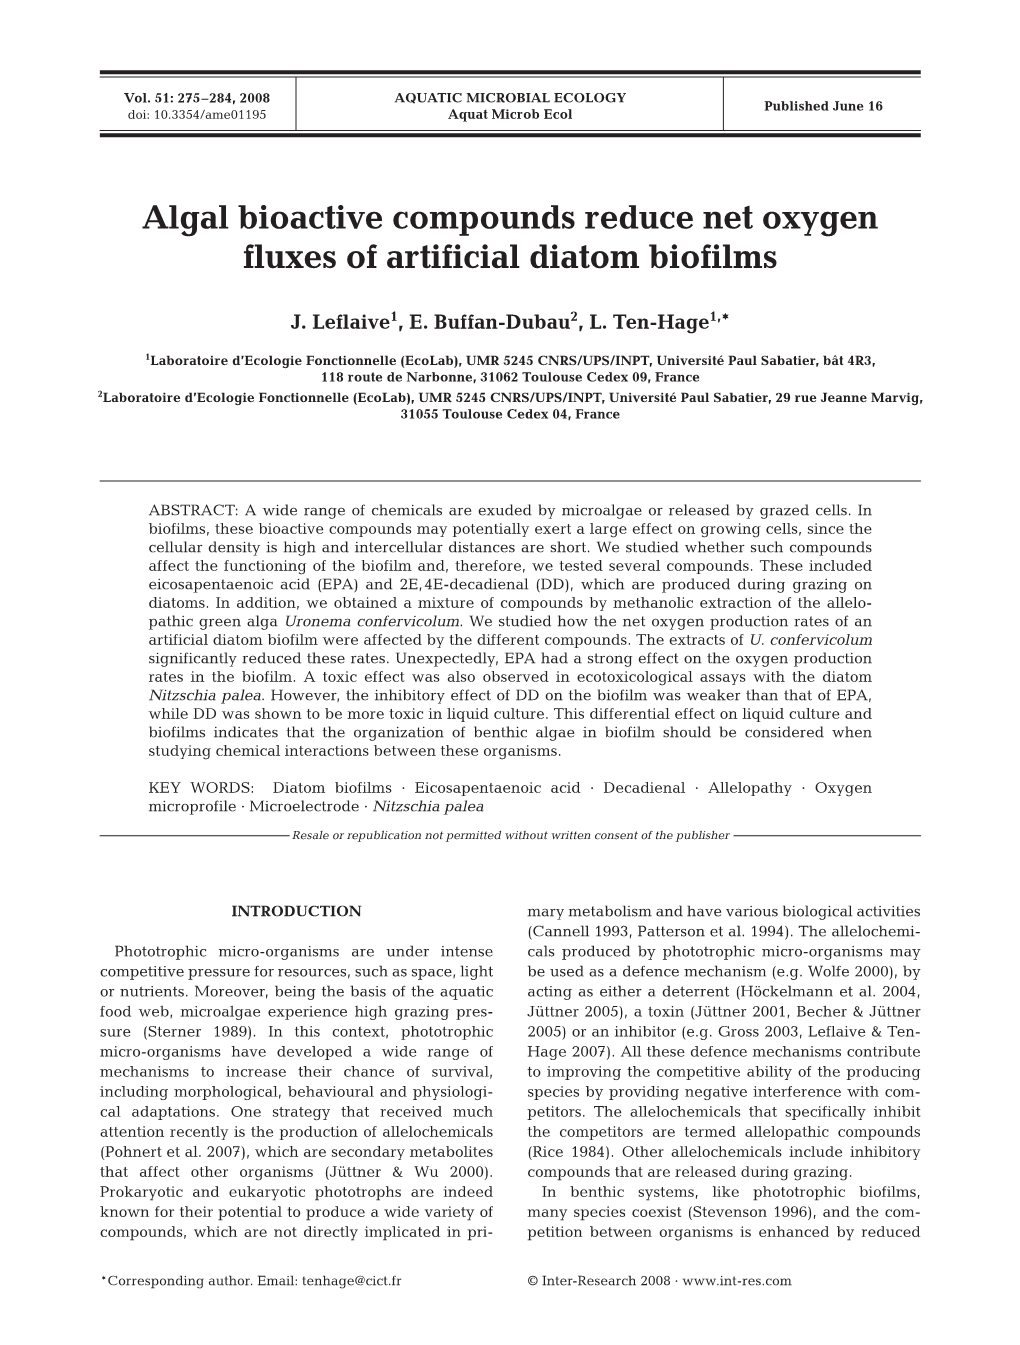 Algal Bioactive Compounds Reduce Net Oxygen Fluxes of Artificial Diatom Biofilms